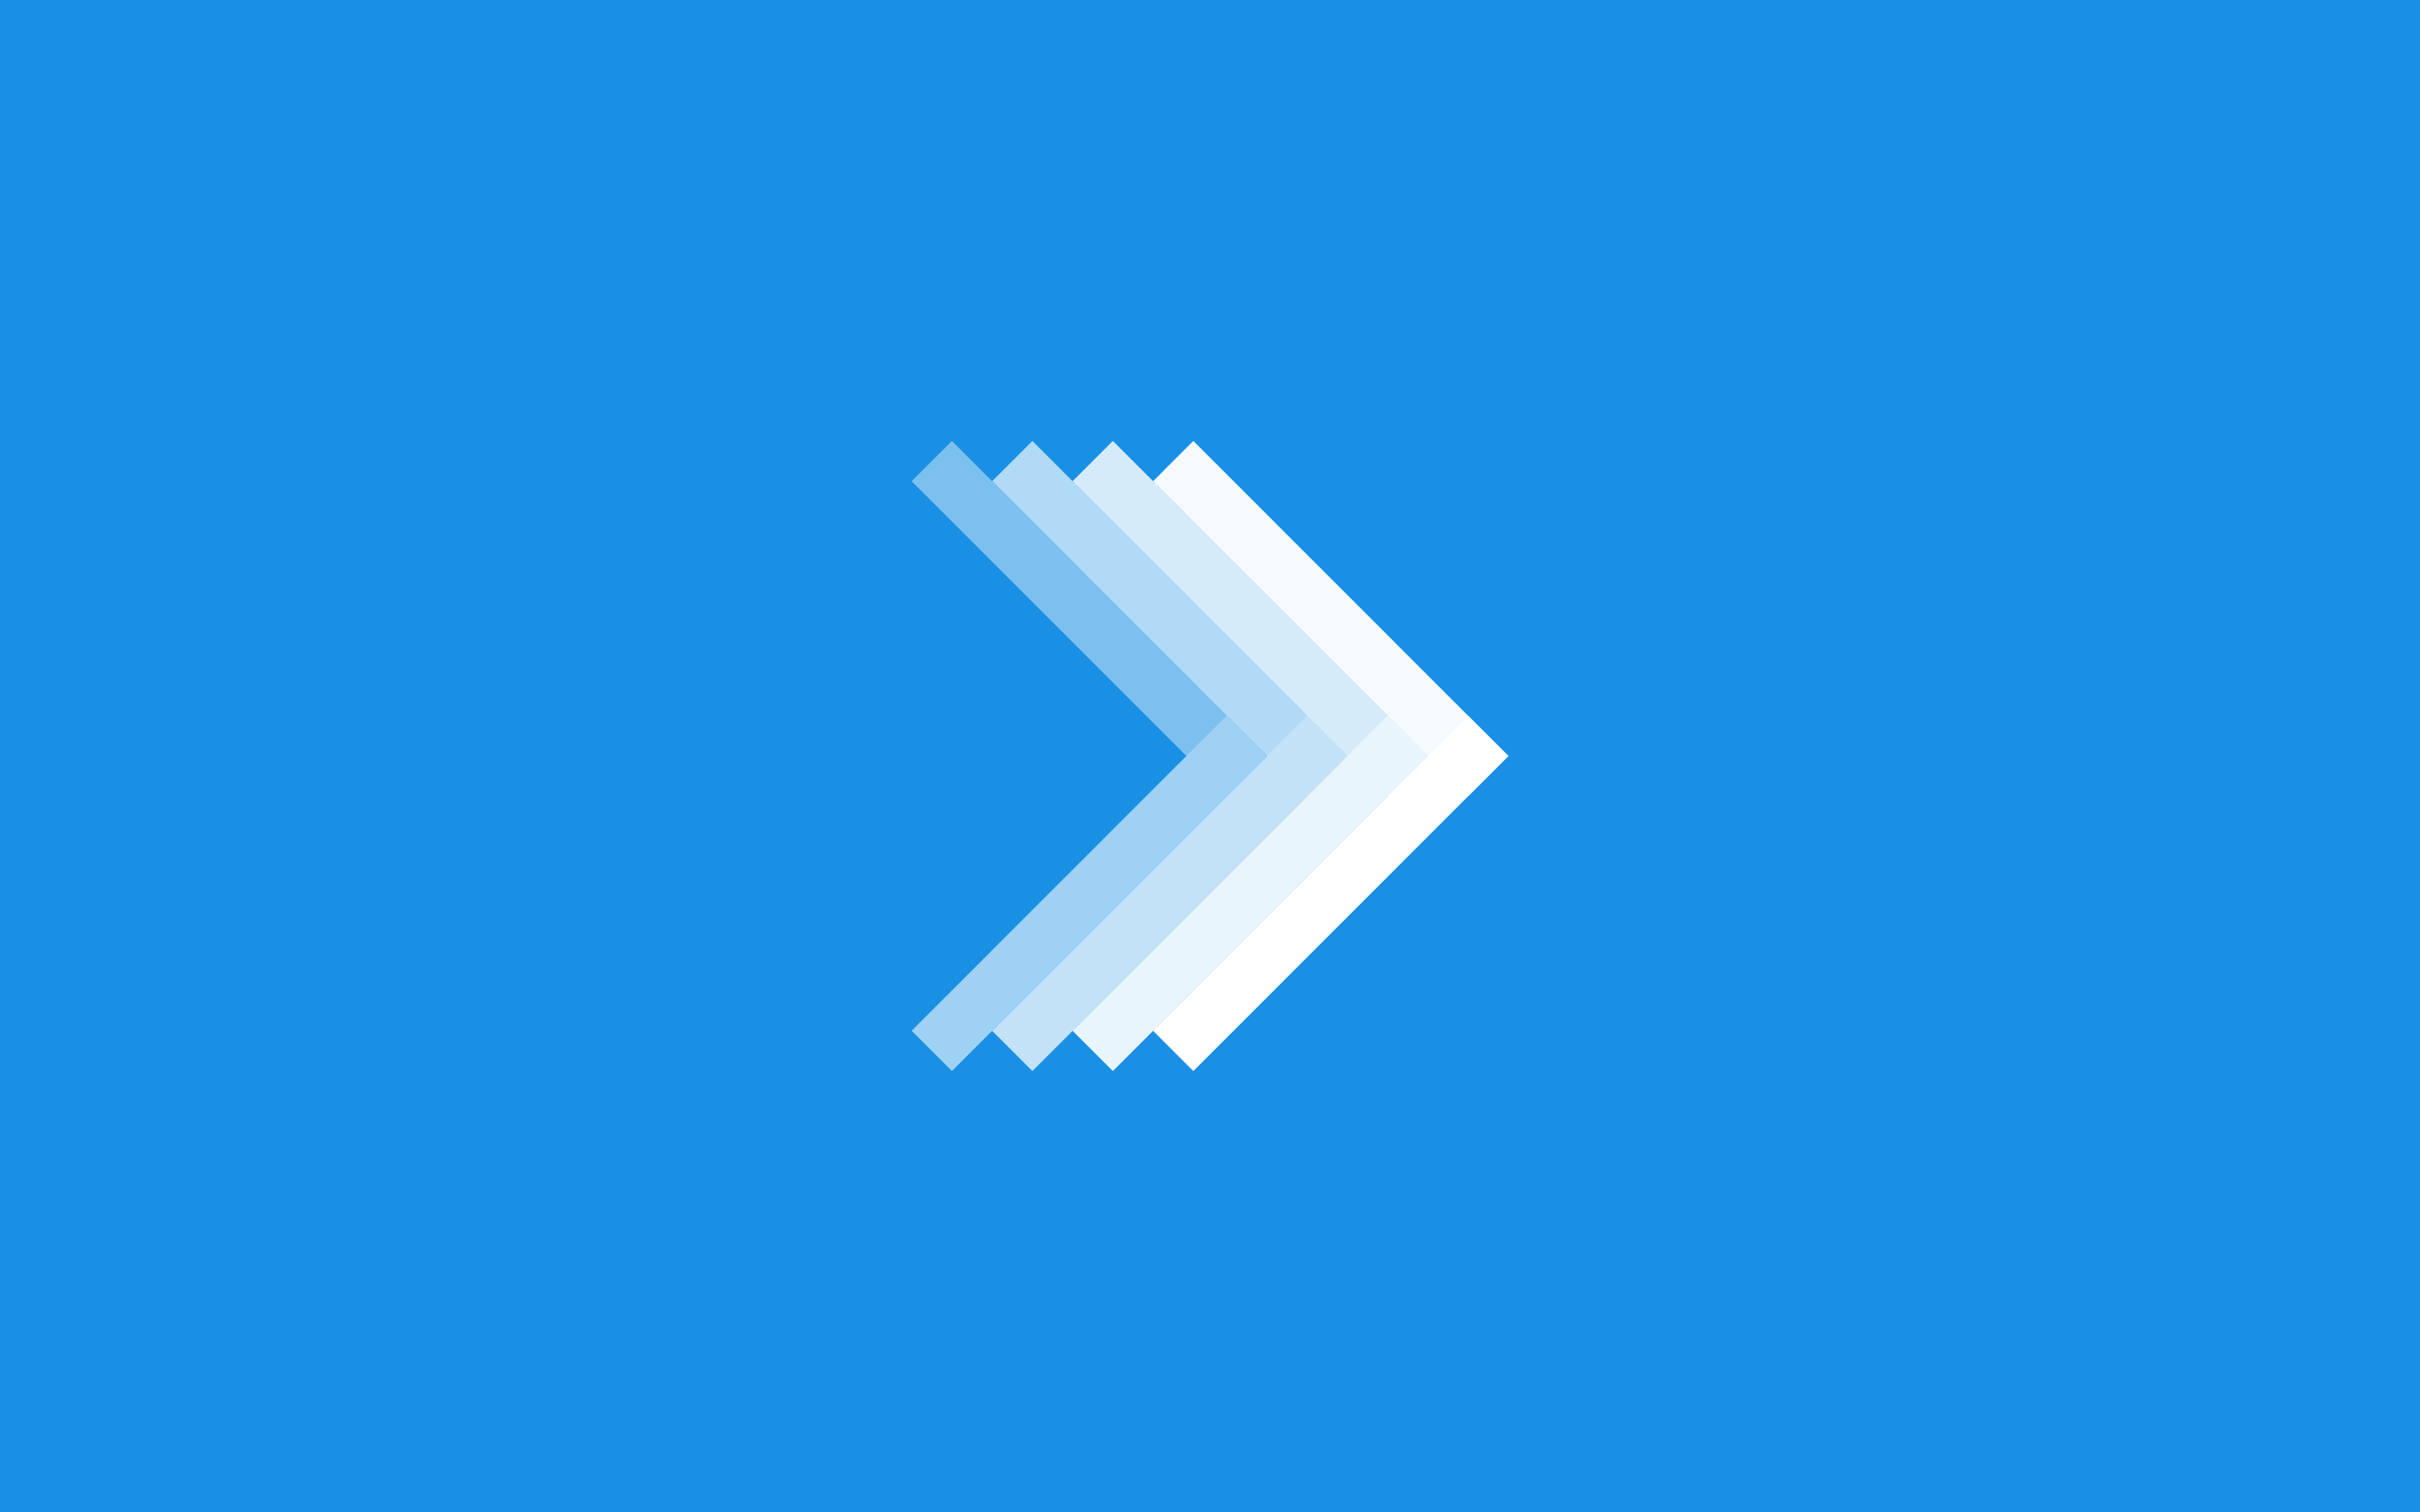 General 2880x1800 minimalism arrow (design) blue blue background simple background artwork digital art